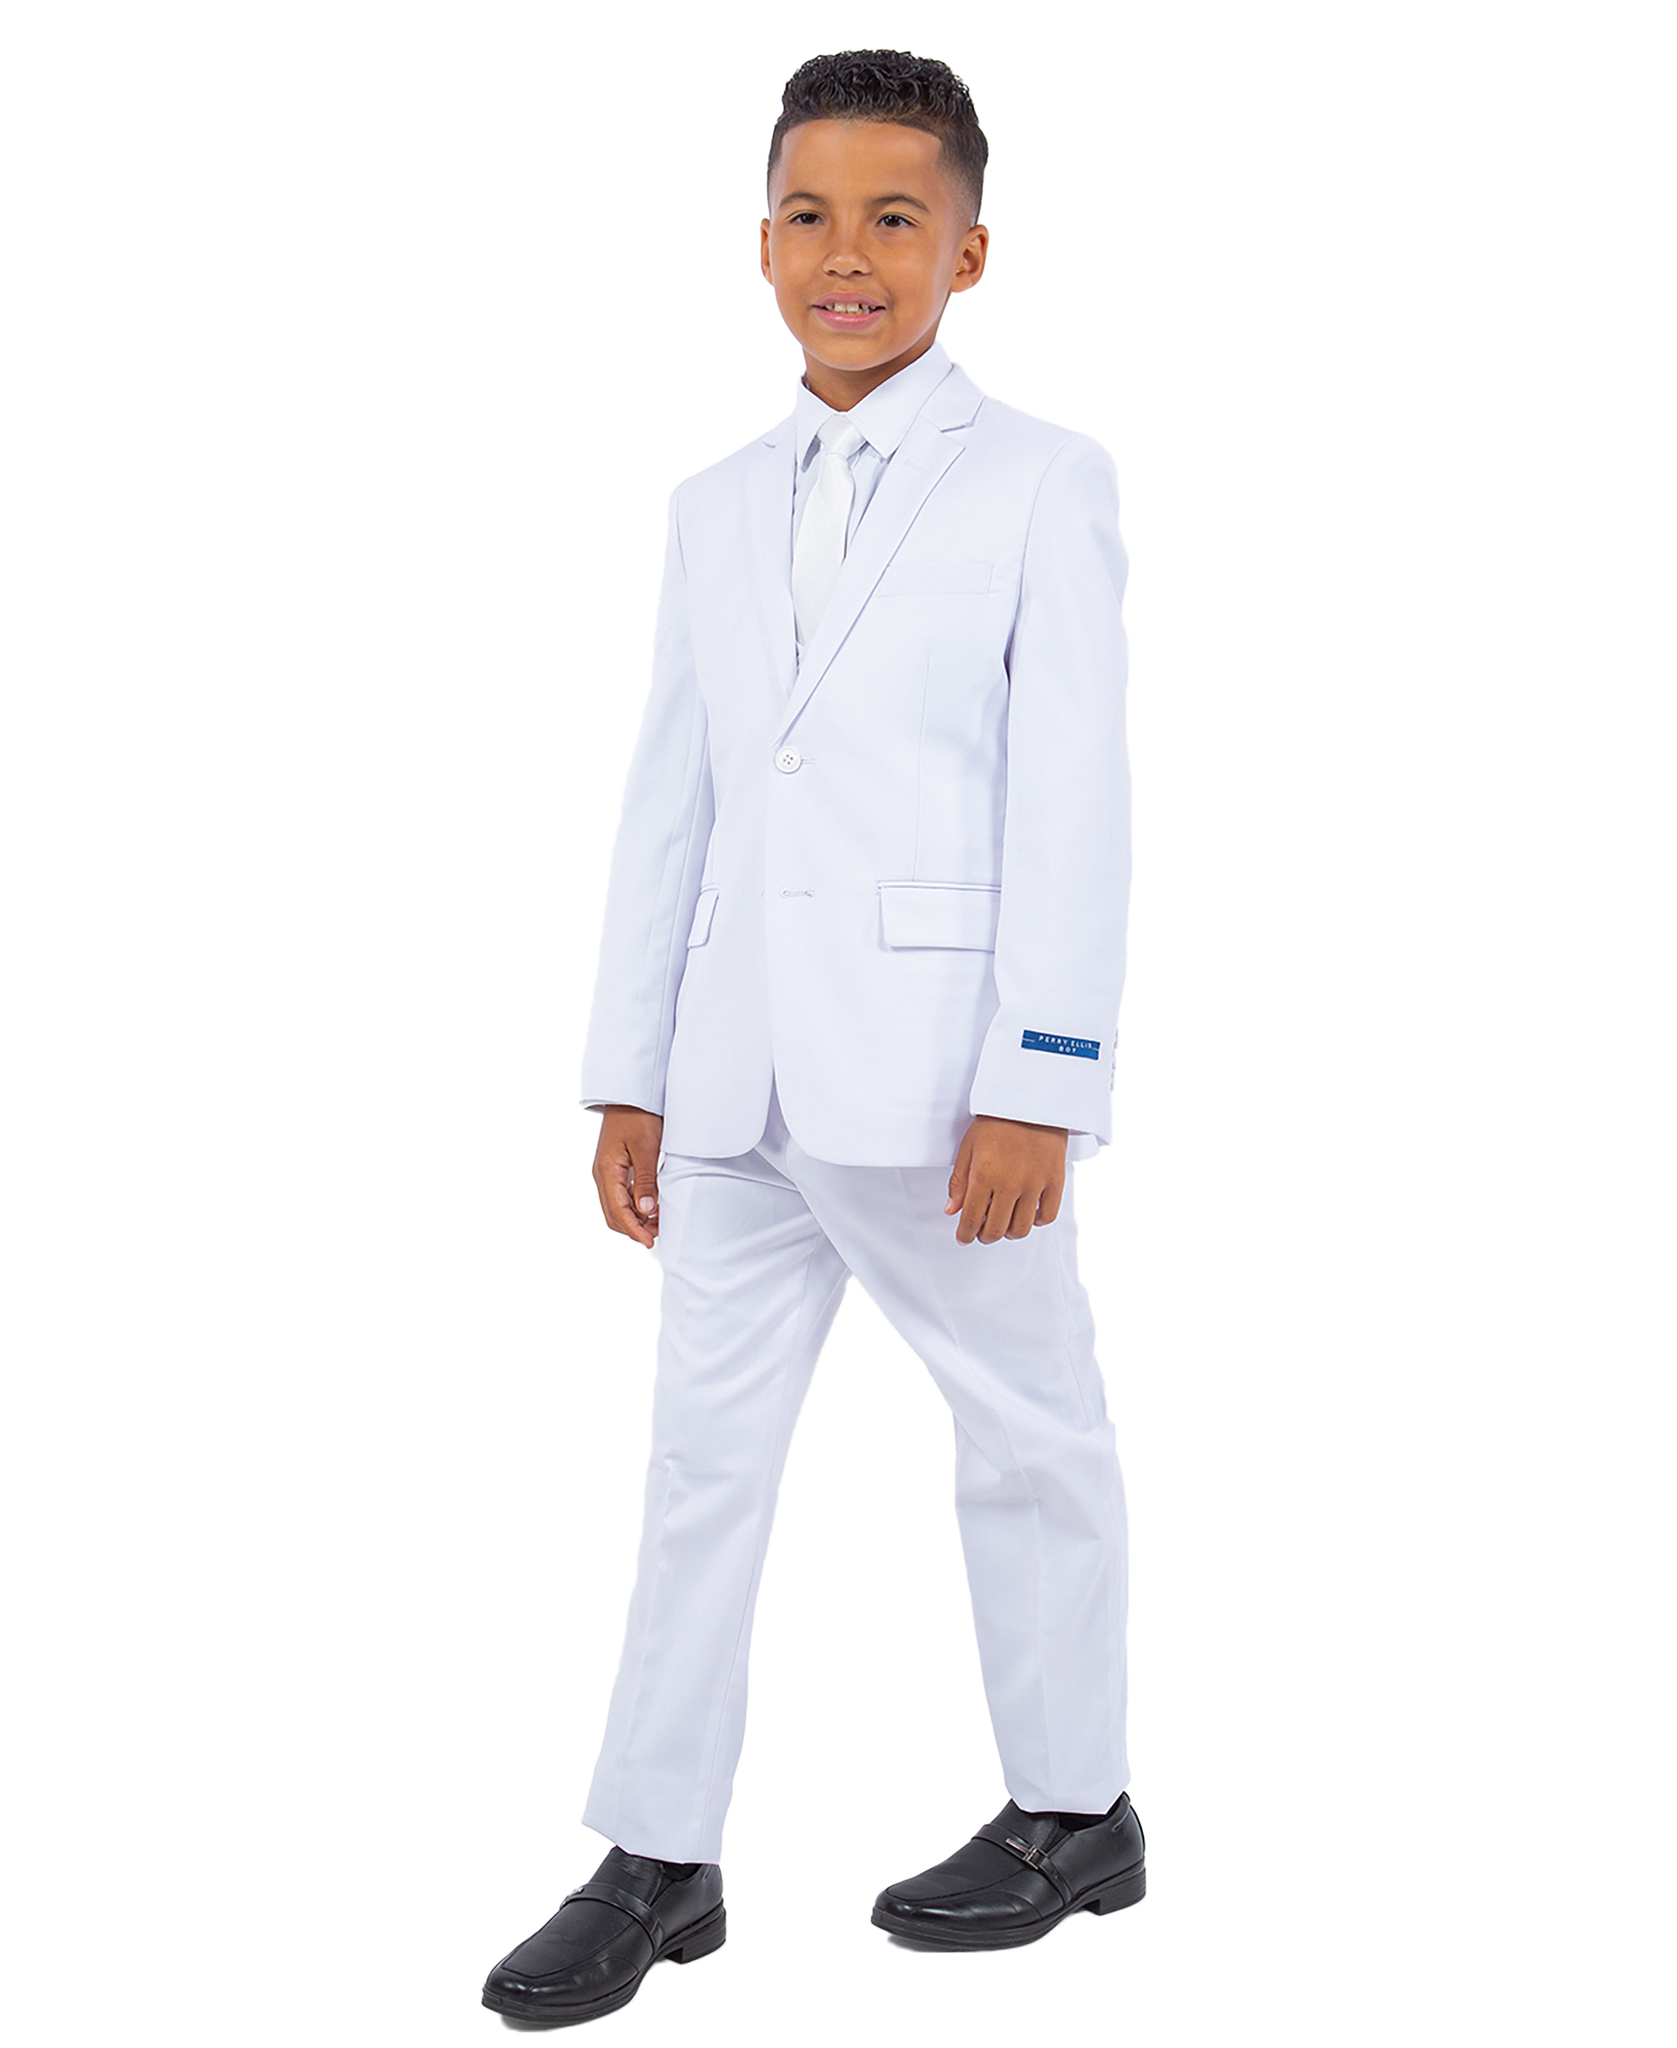 Perry Ellis Boys Suit Solid White